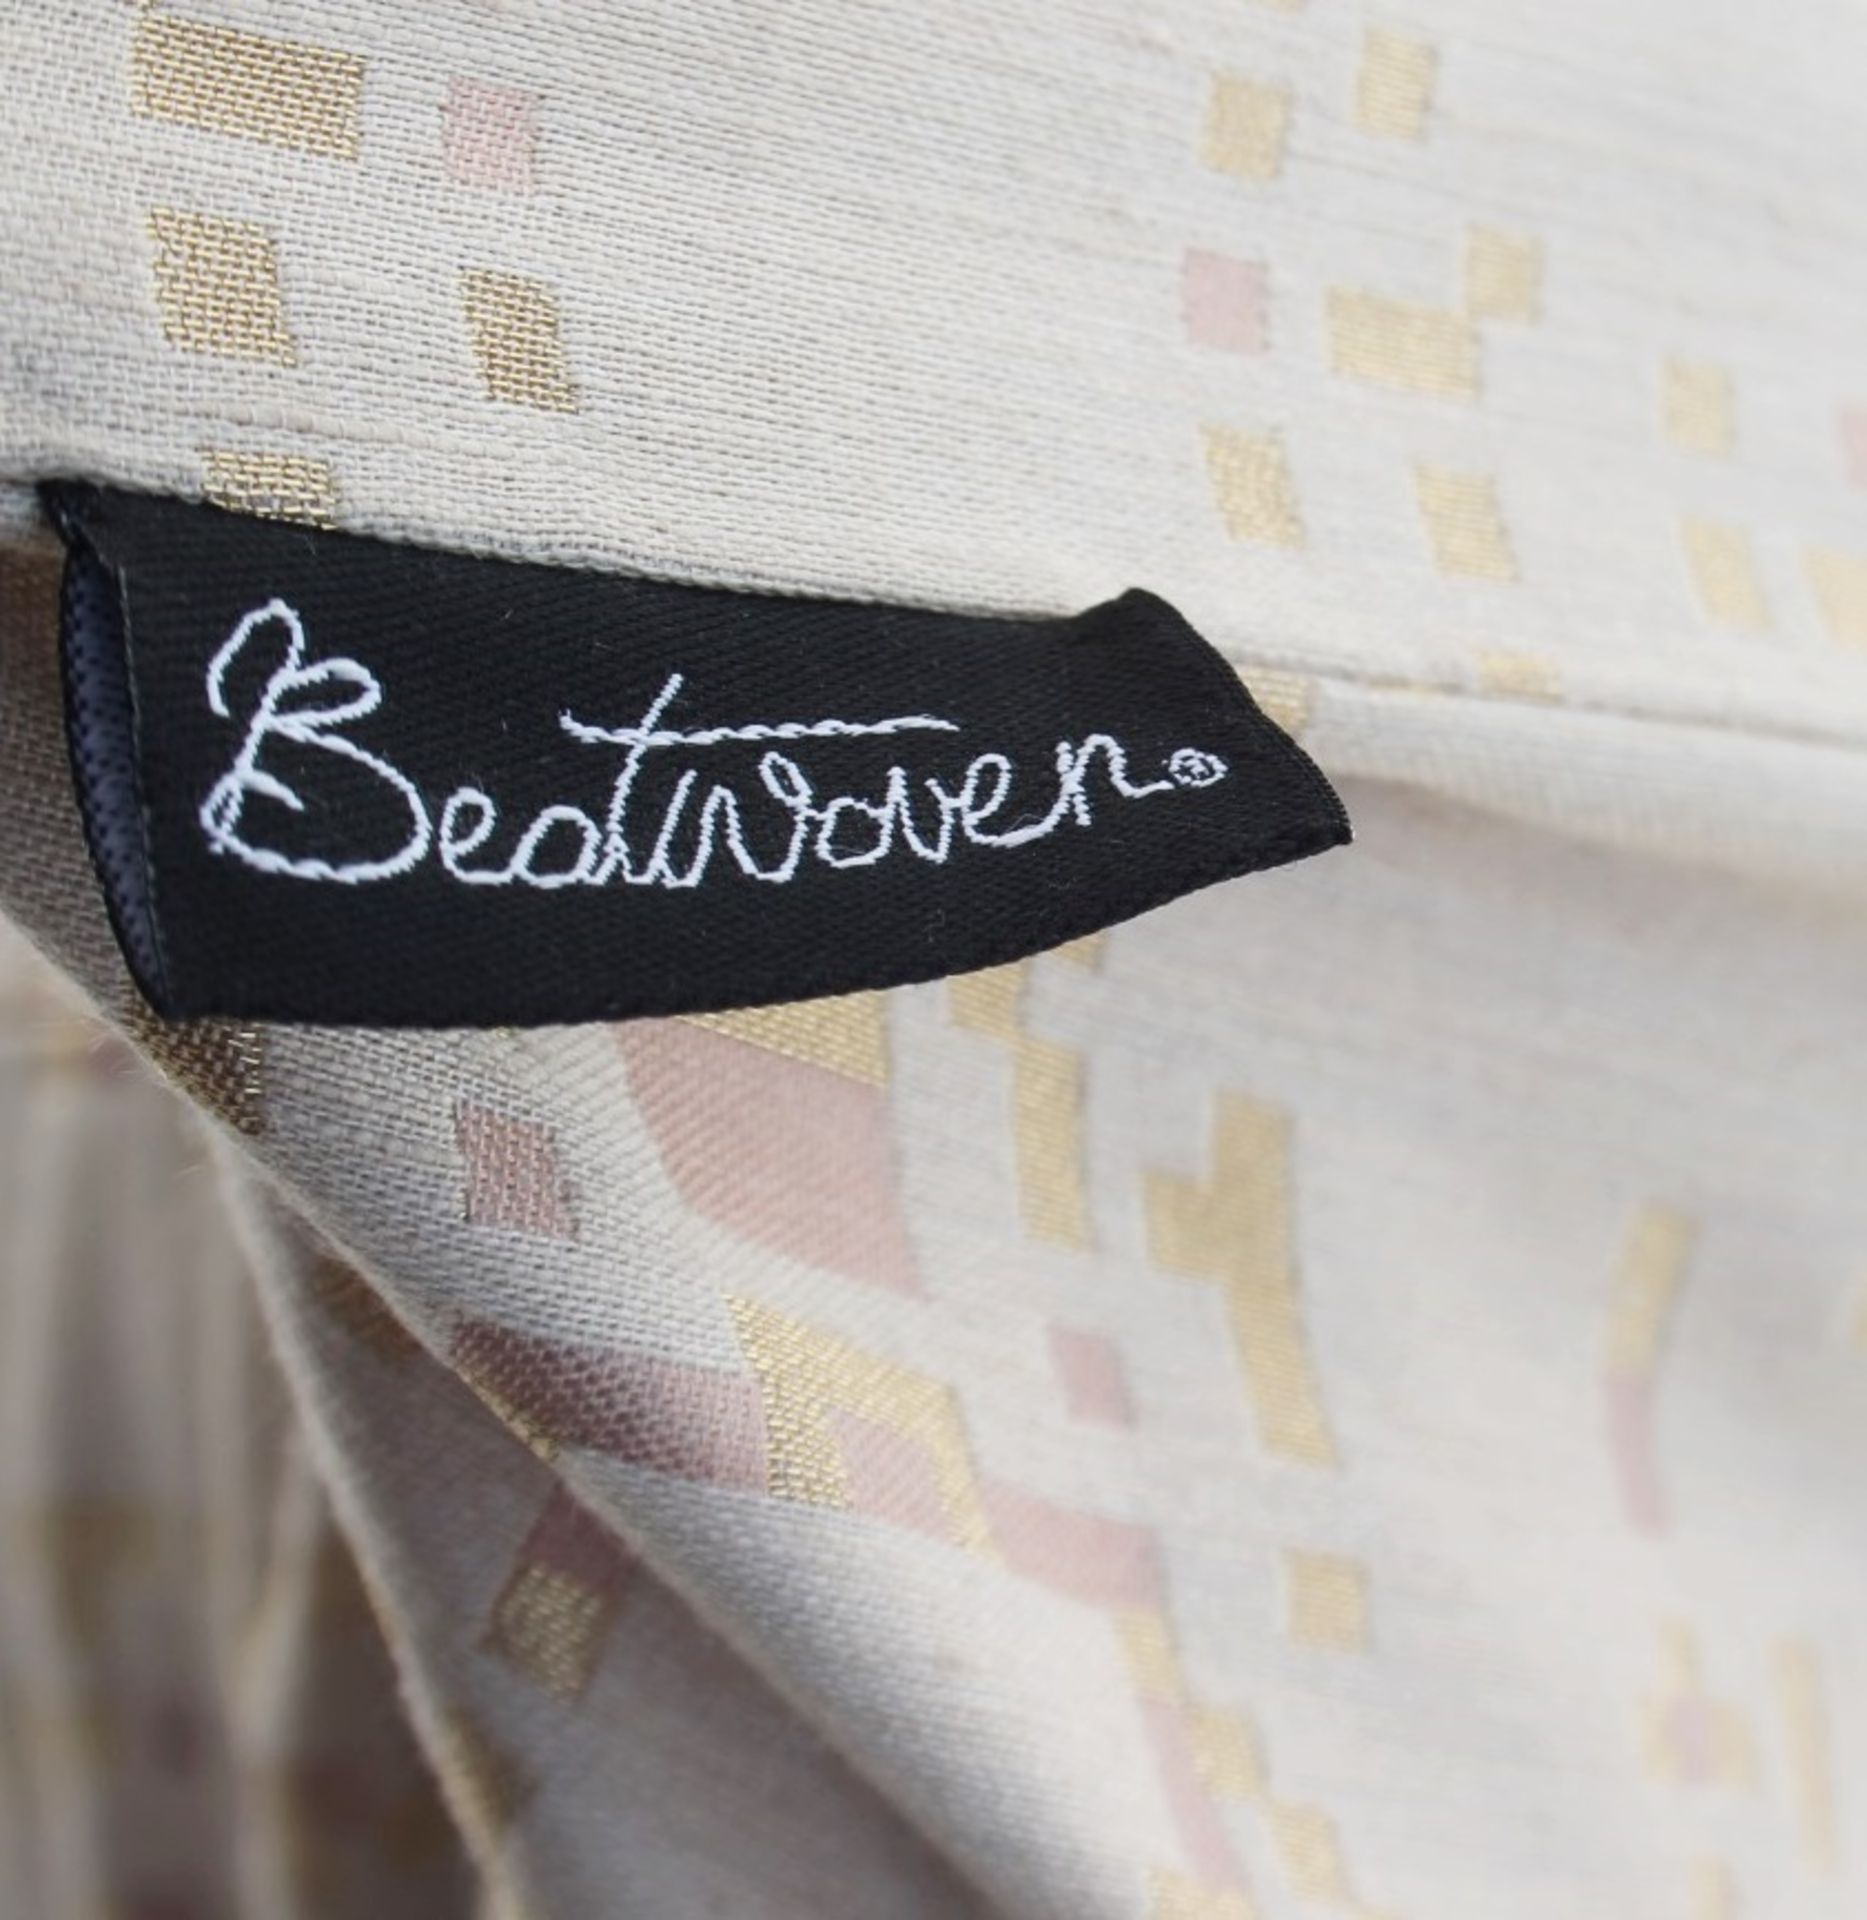 1 x BEATWOVEN 'Adage' Designer Large Weaved Silk Cushion - Original Price £295.00 - Ref: 5536778/ - Image 4 of 6